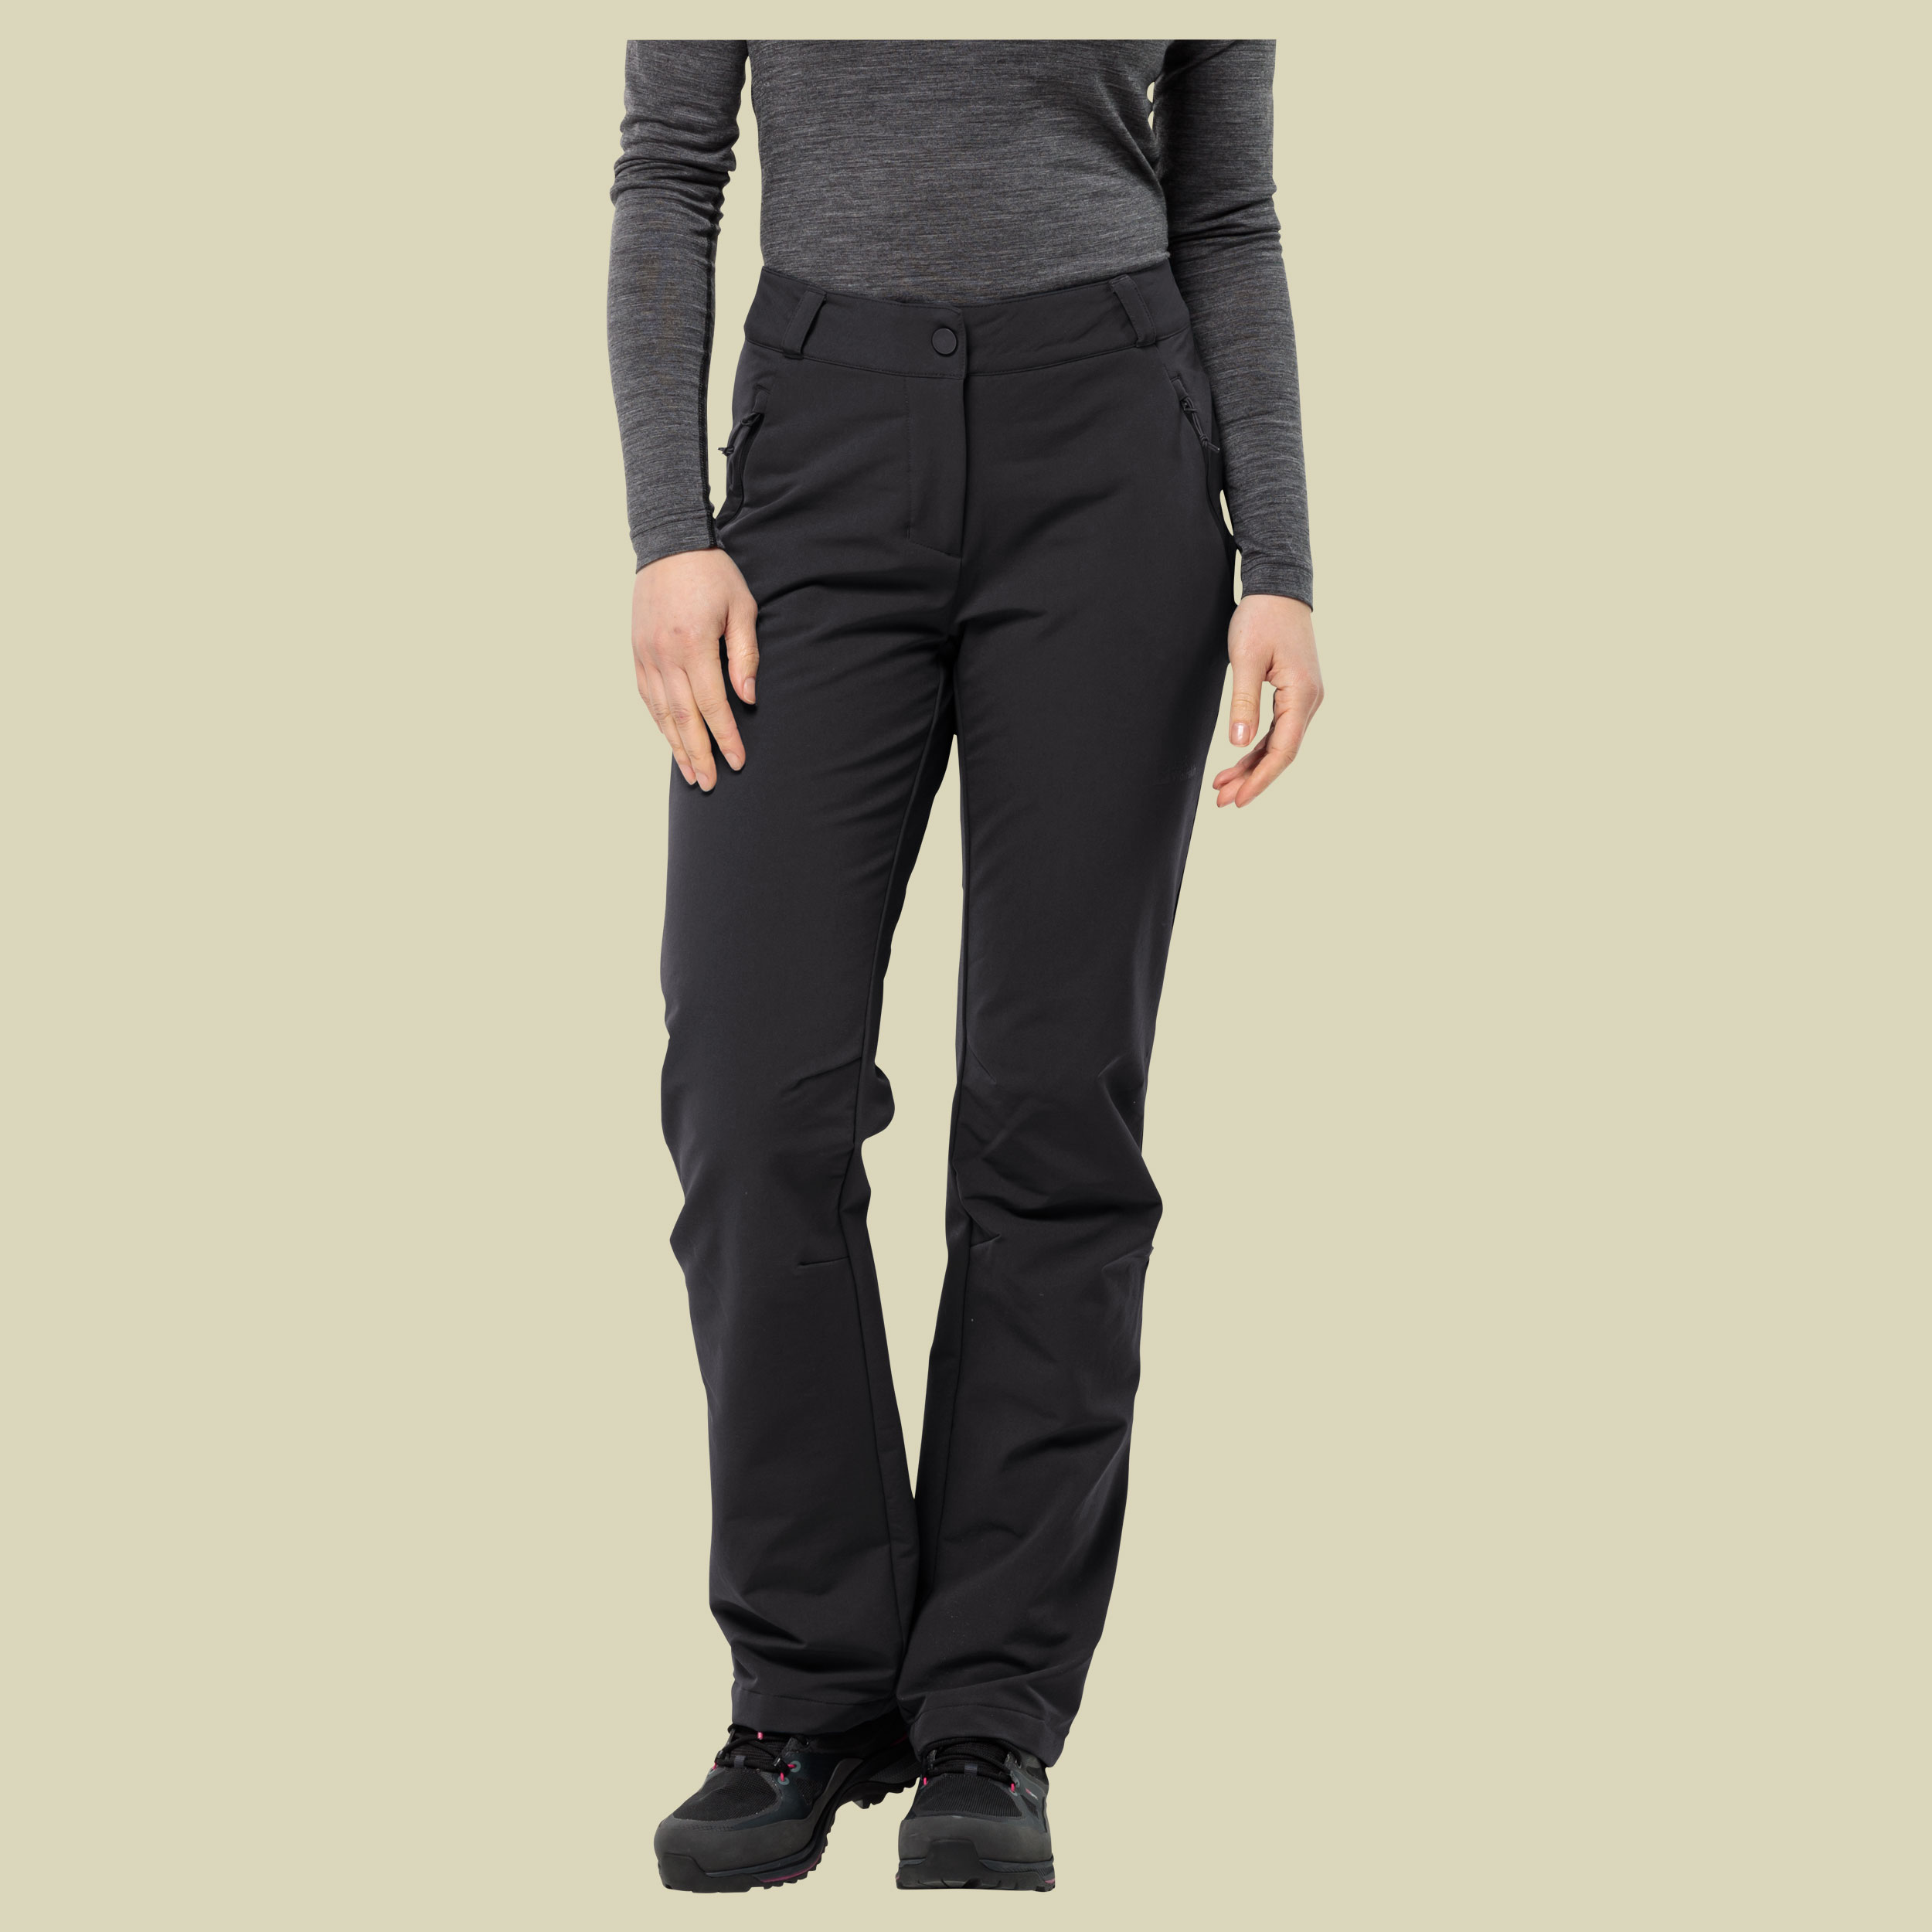 Activate Thermic Pants Women Größe 44-short Farbe black